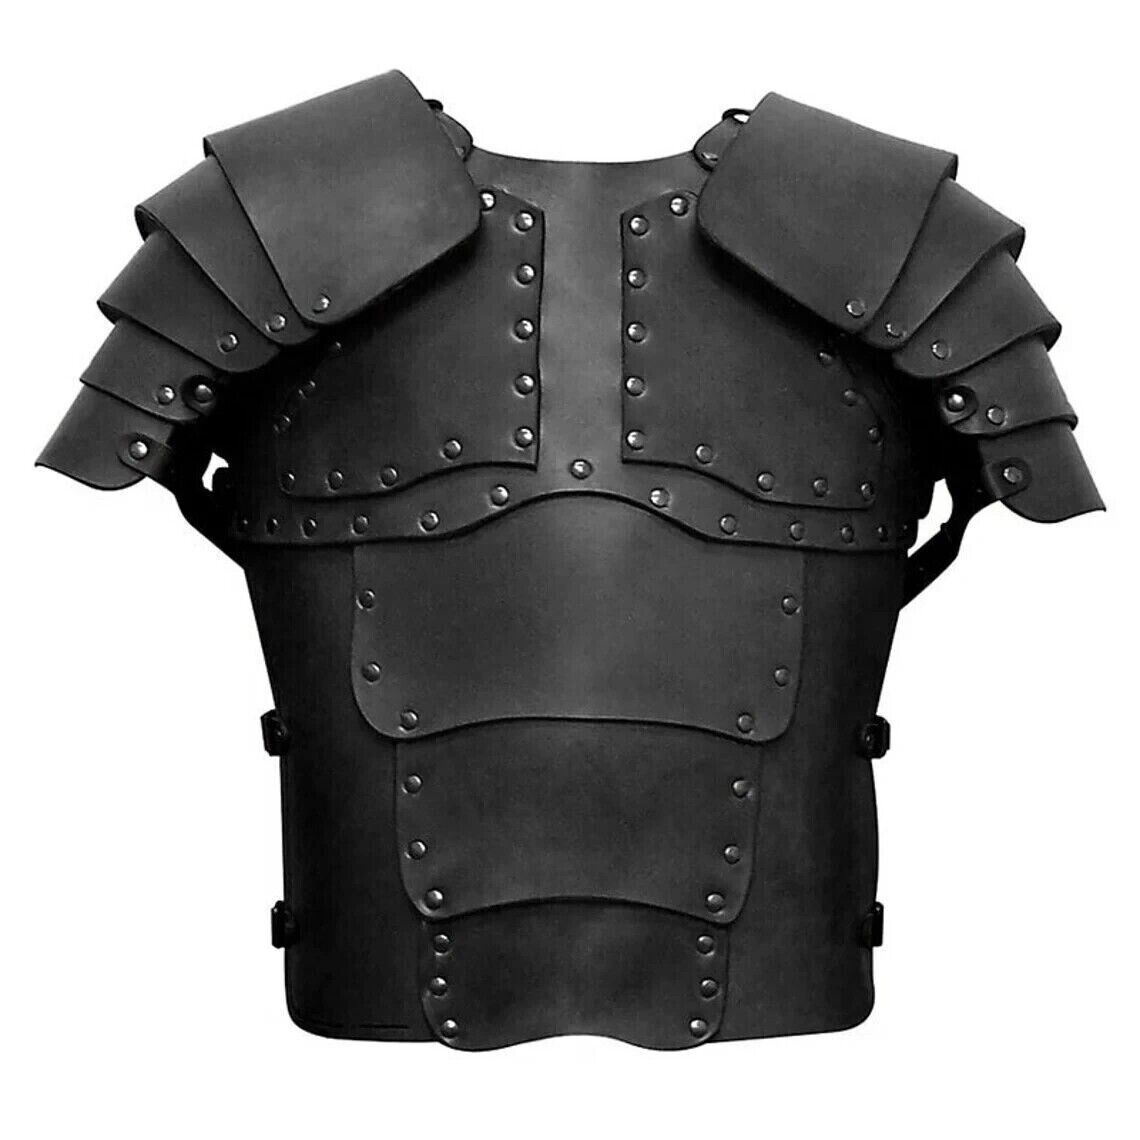 Viking Warrior Armor Rogue Leather Rivet chest armor best for costume gift item